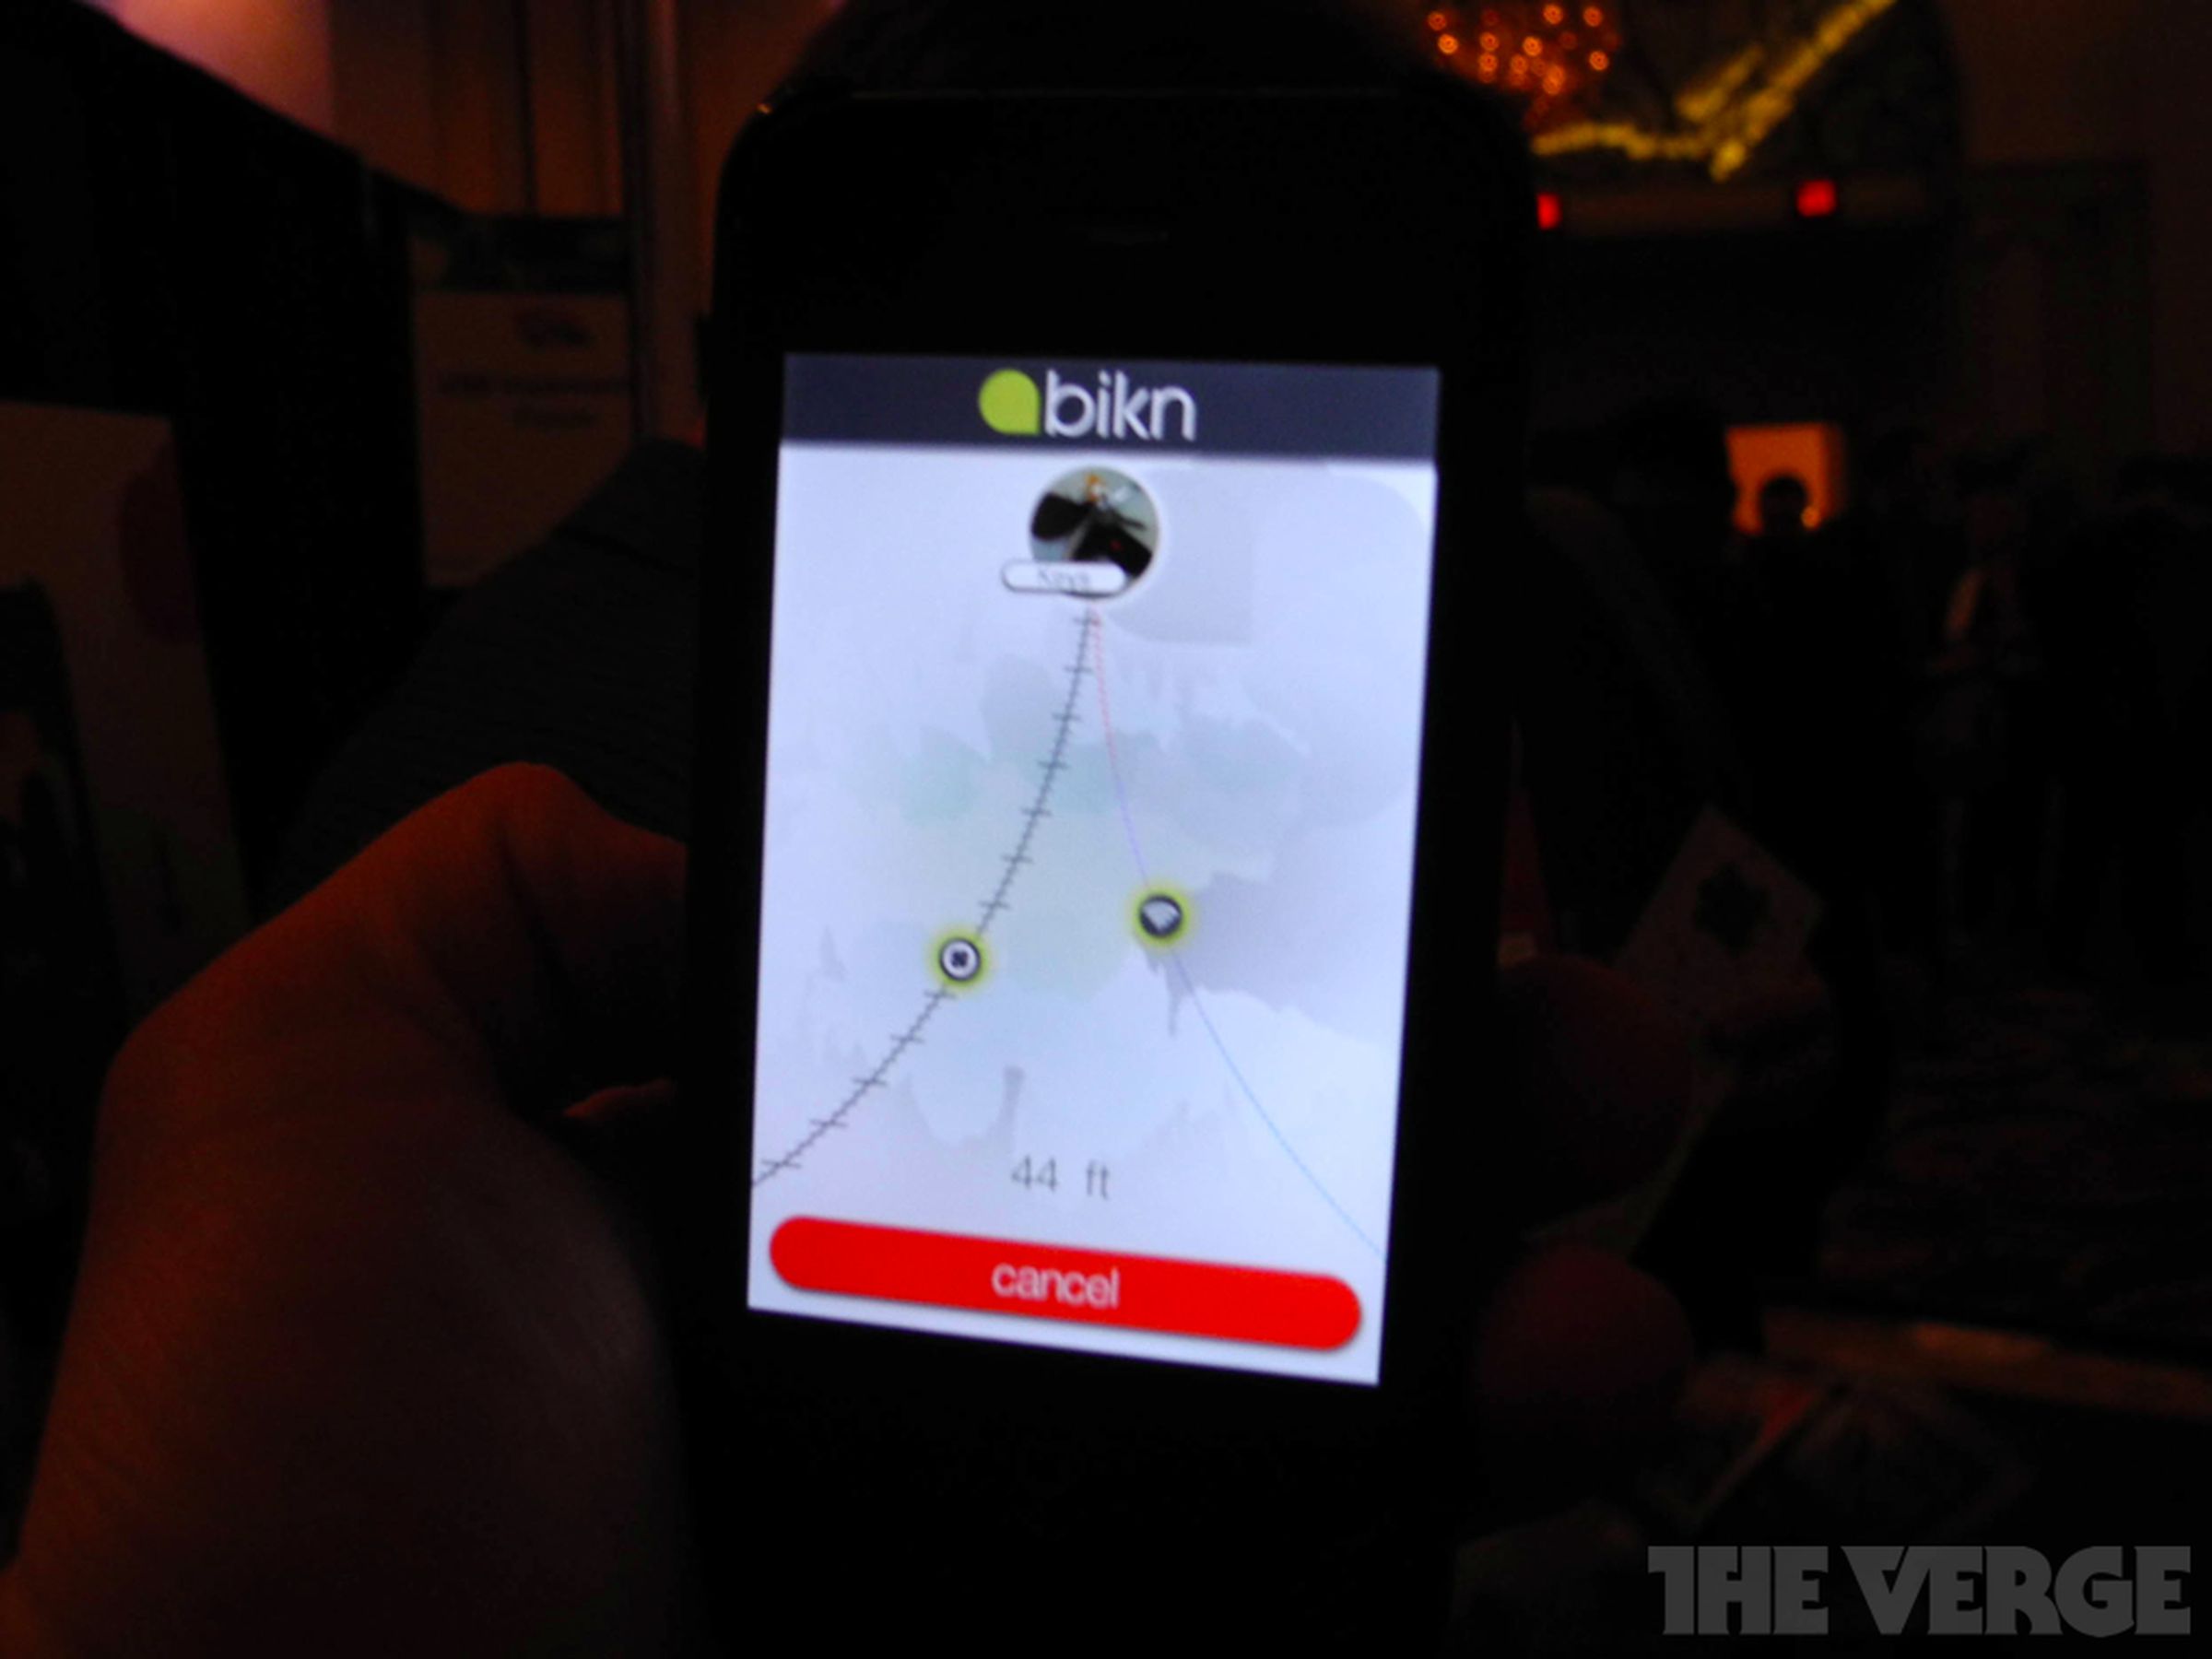 Bikn iPhone locator hands-on pictures